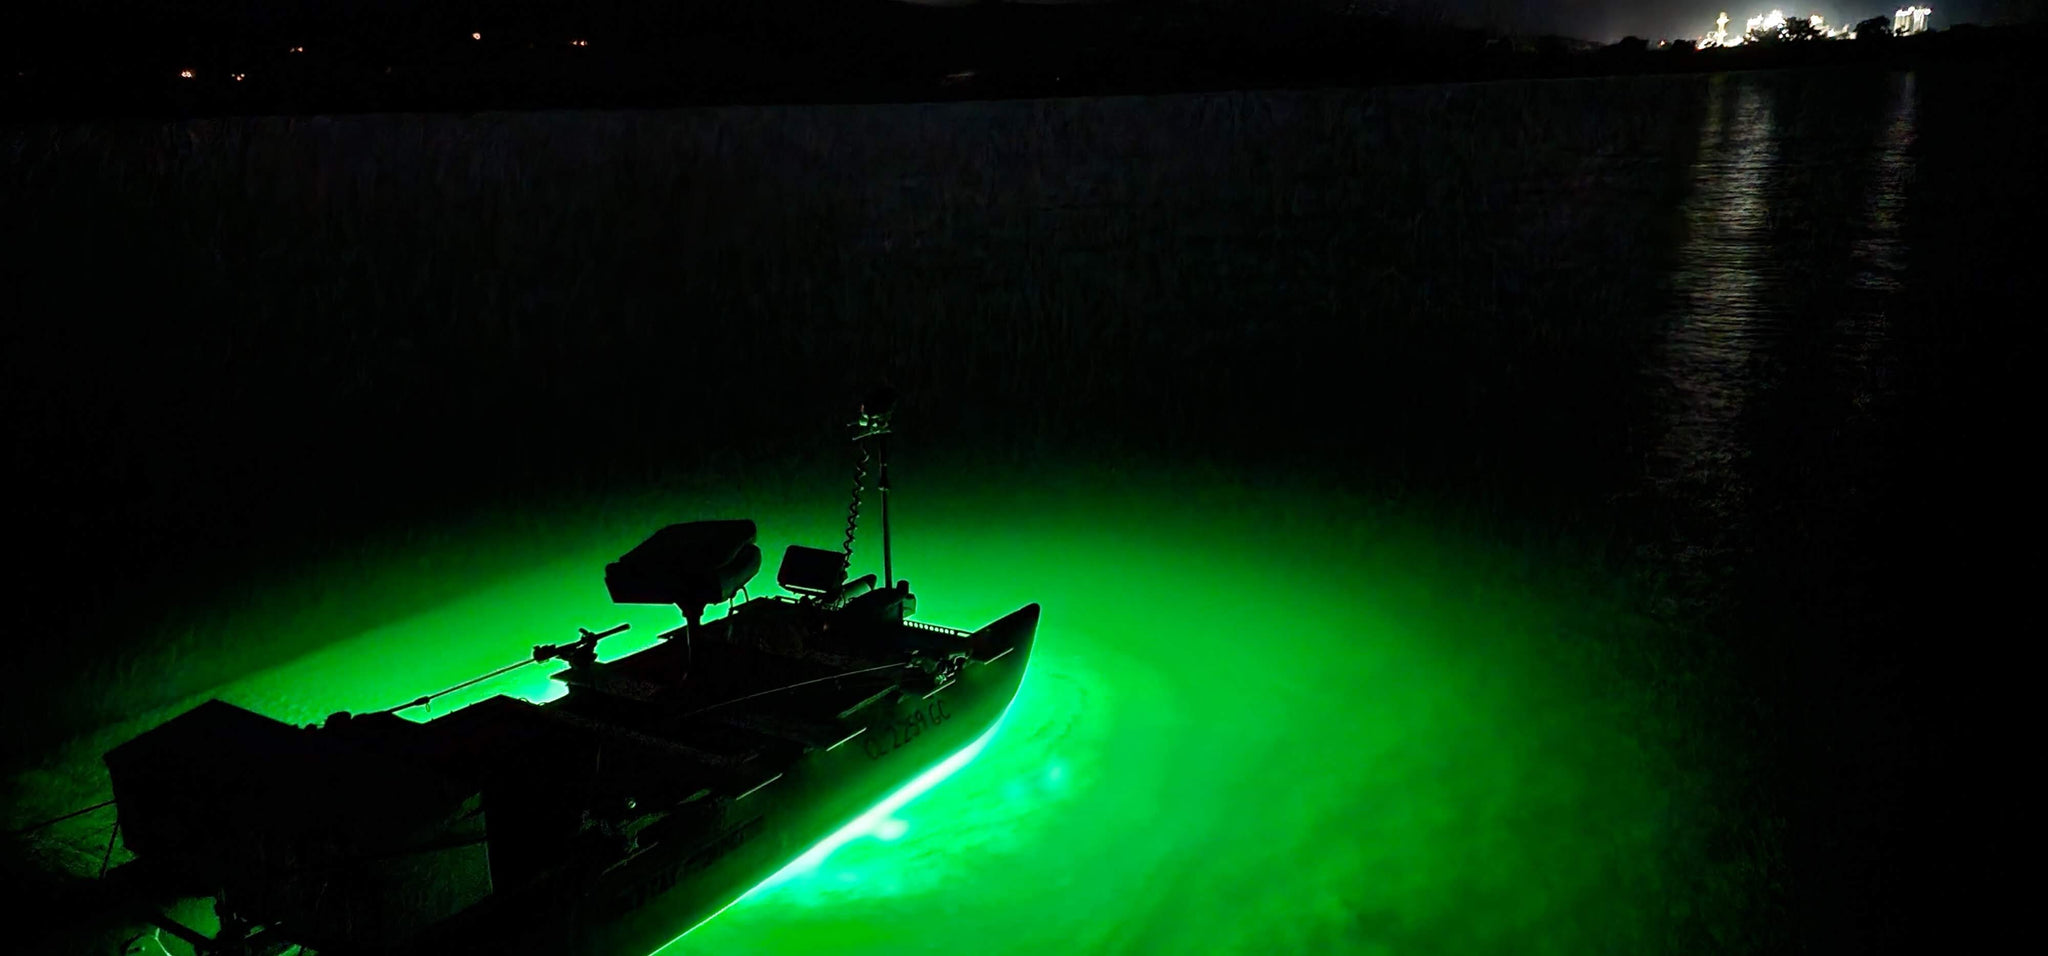 Buy Green Blob Outdoors Underwater Fishing Lights, 12 Volt Battery